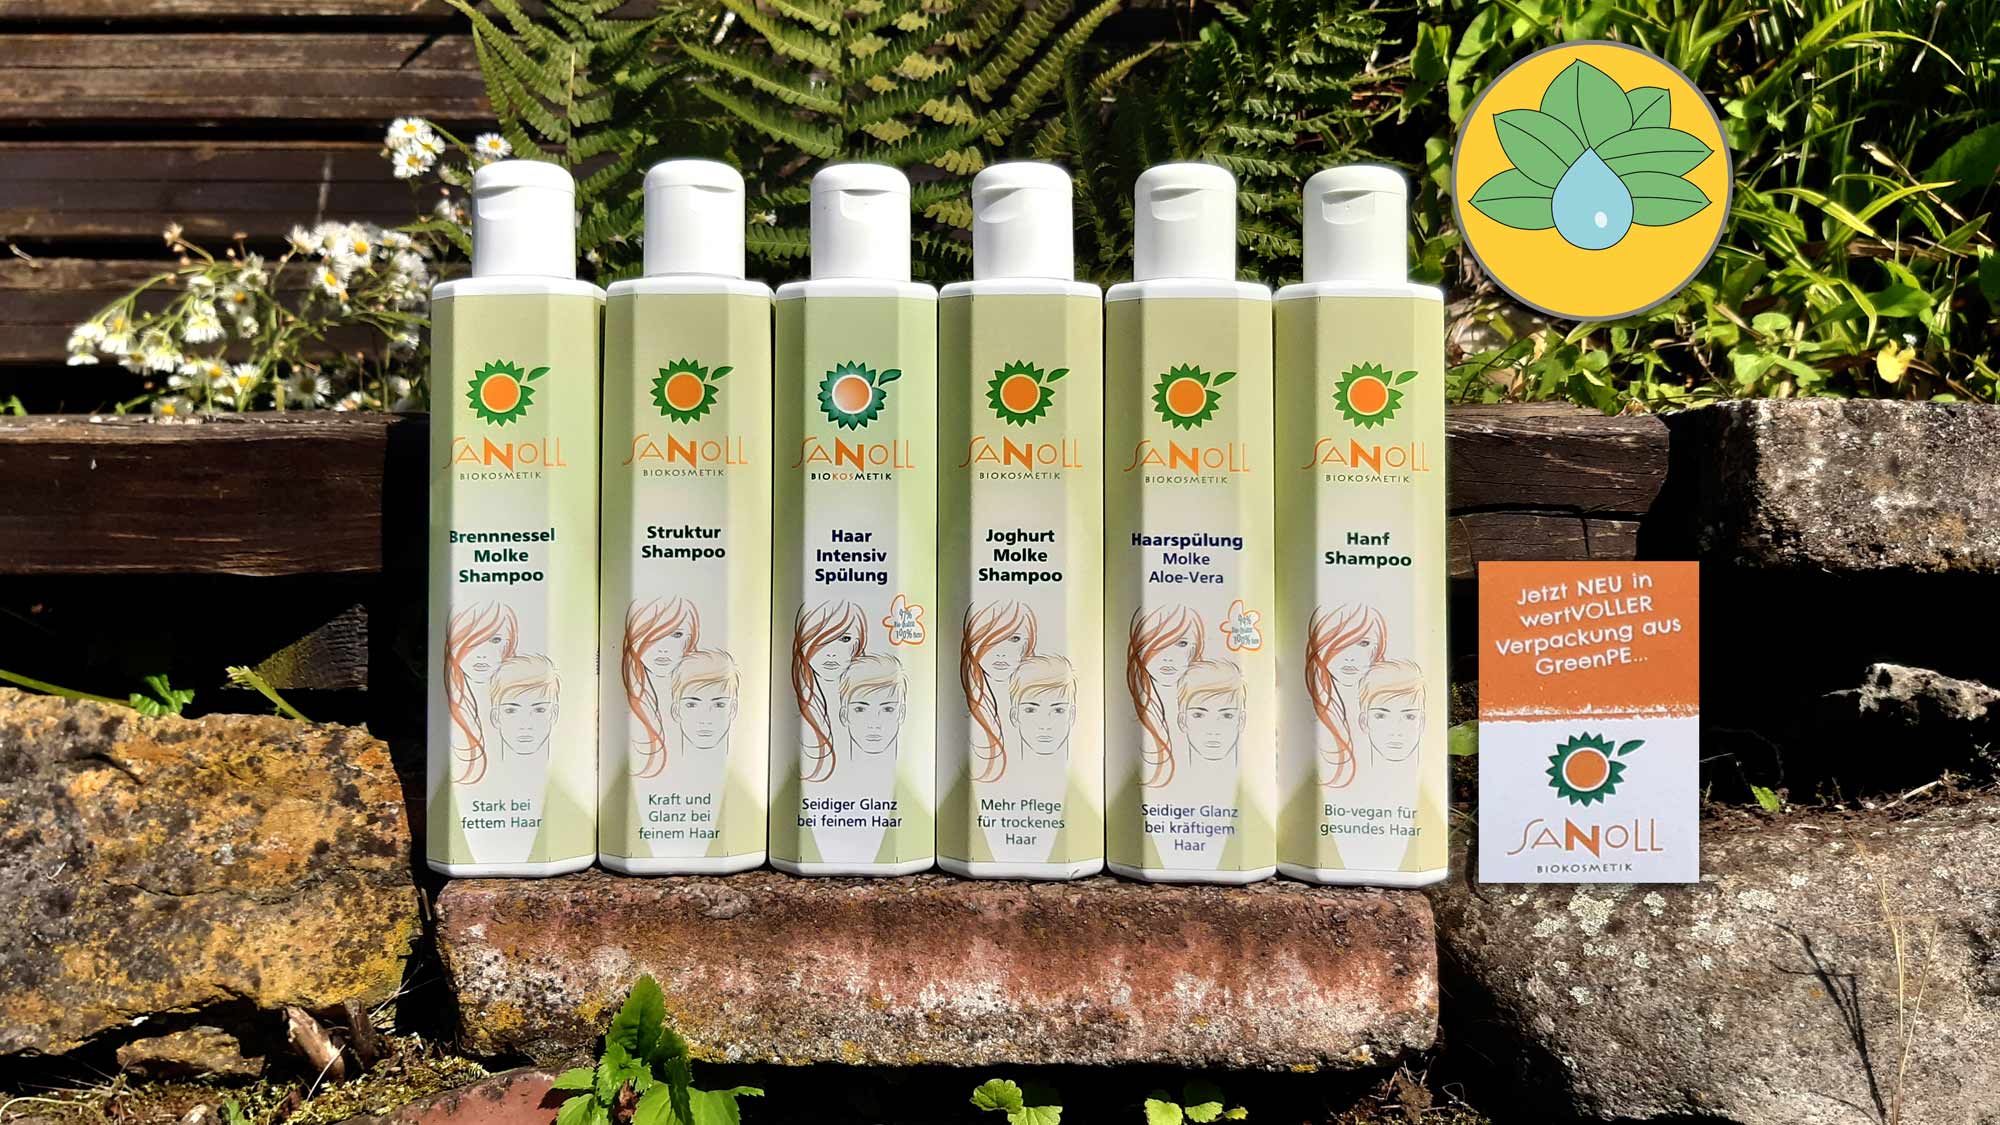 Sanoll BioKosmetik Struktur Shampoo, Haar Intensiv Spülung, Jogurt Molke Shampoo, Aloe-Vera, Hanf Shampoo